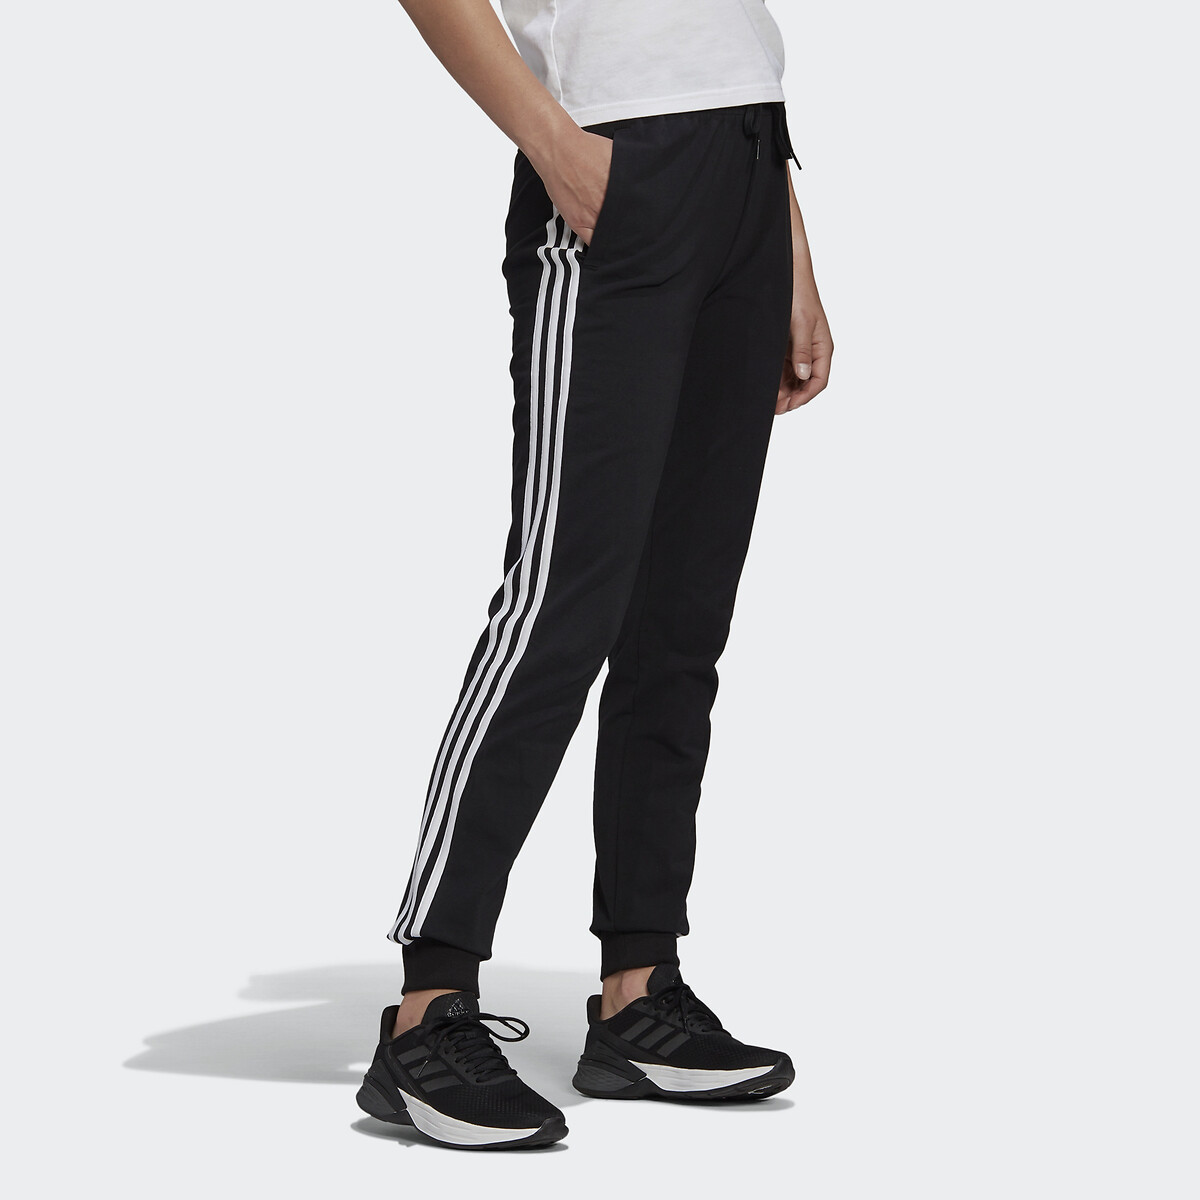 Essentials single joggers in jersey cotton, black, Adidas Sportswear ...